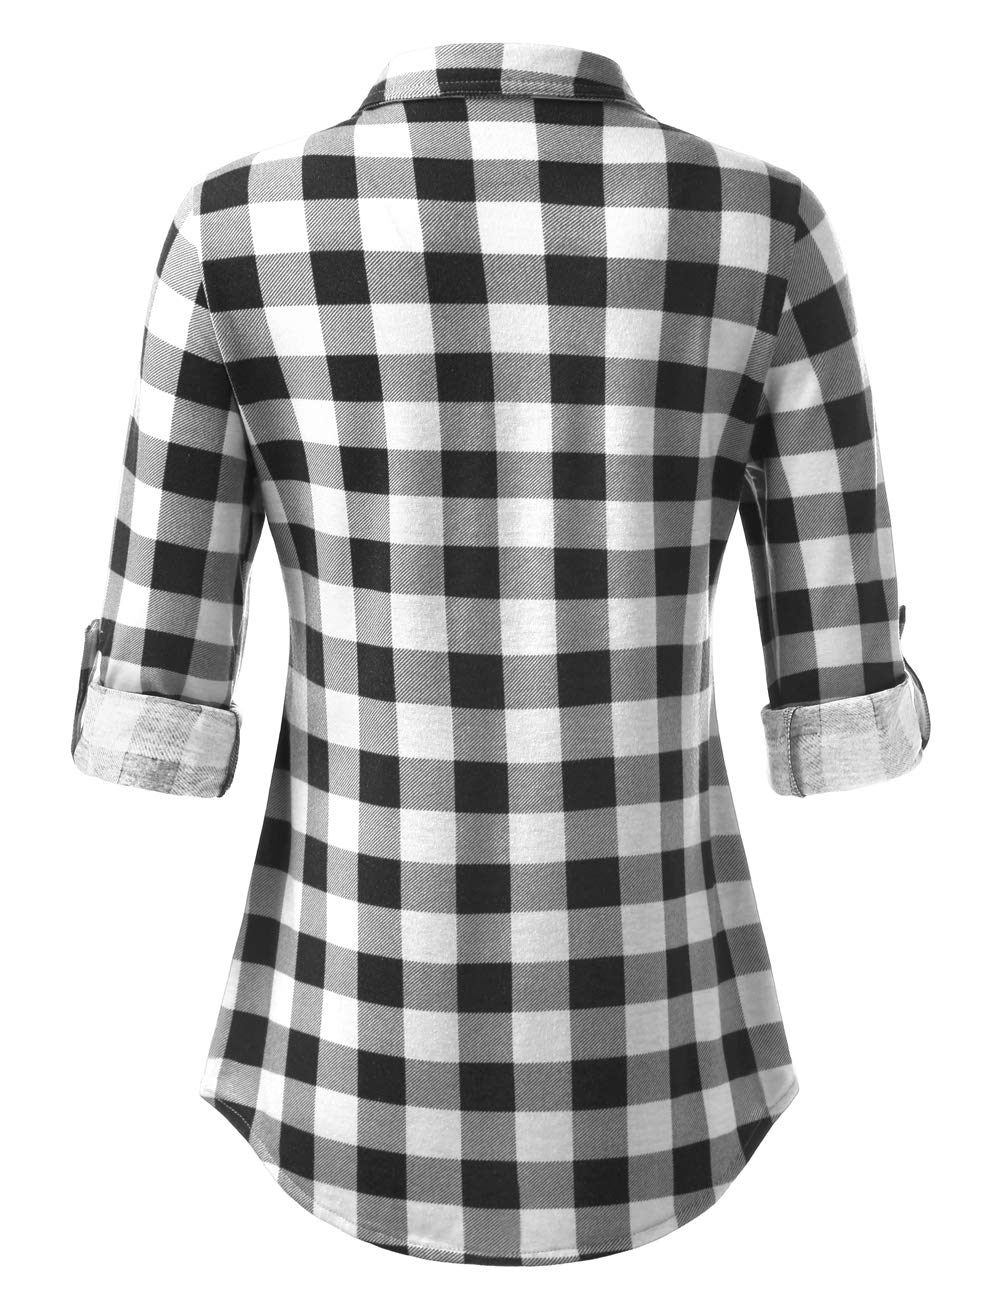 DJT Roll Up Long Sleeve Black White Plaid Women’s Collared Button Down Plaid Shirt